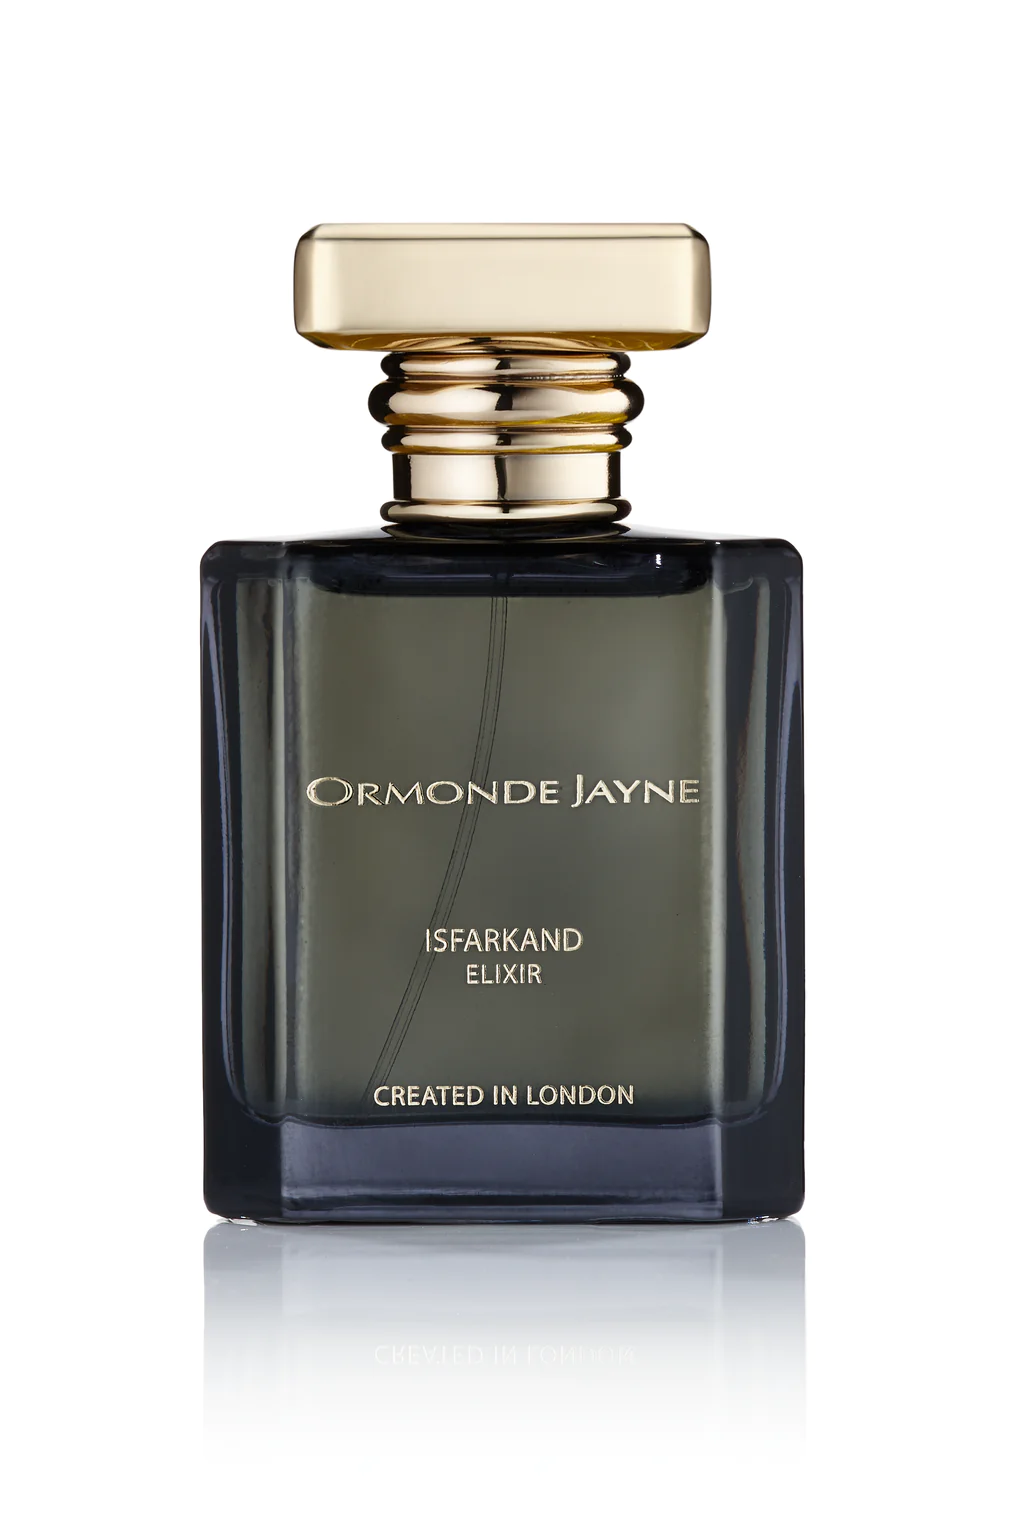 Ormonde Jayne - Isfarkand Elixir - Extrait de Parfum